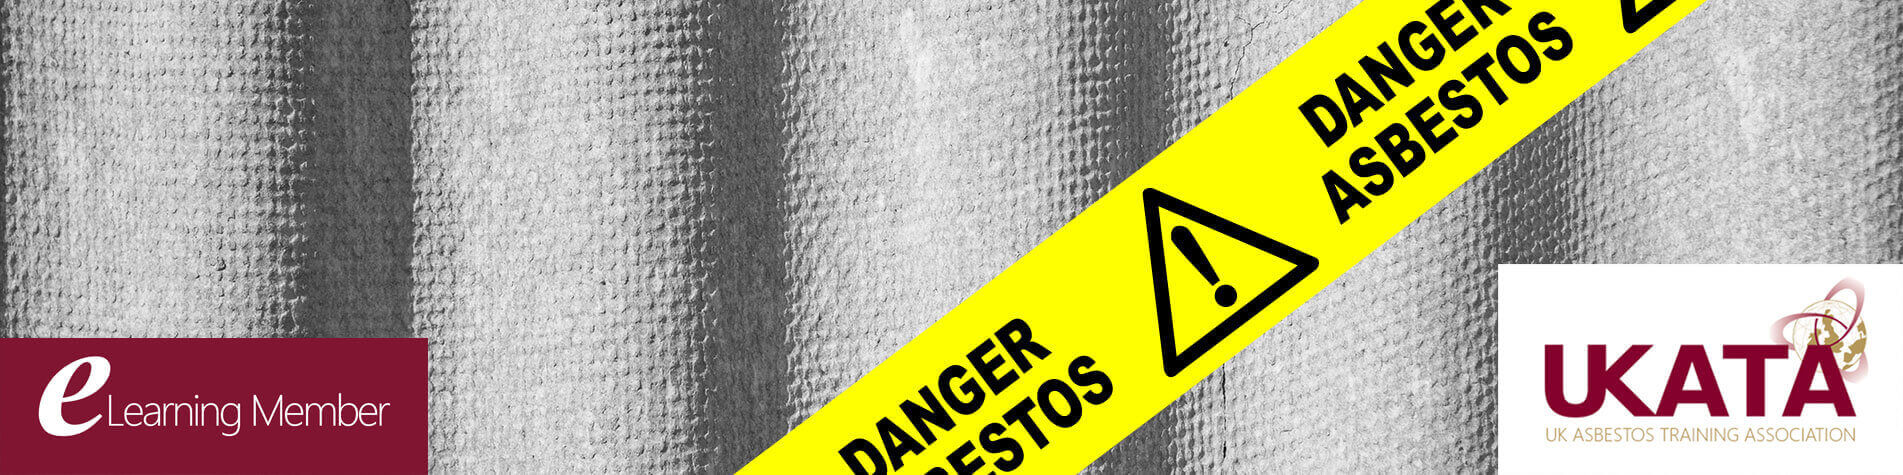 Asbestos Awareness Course Online